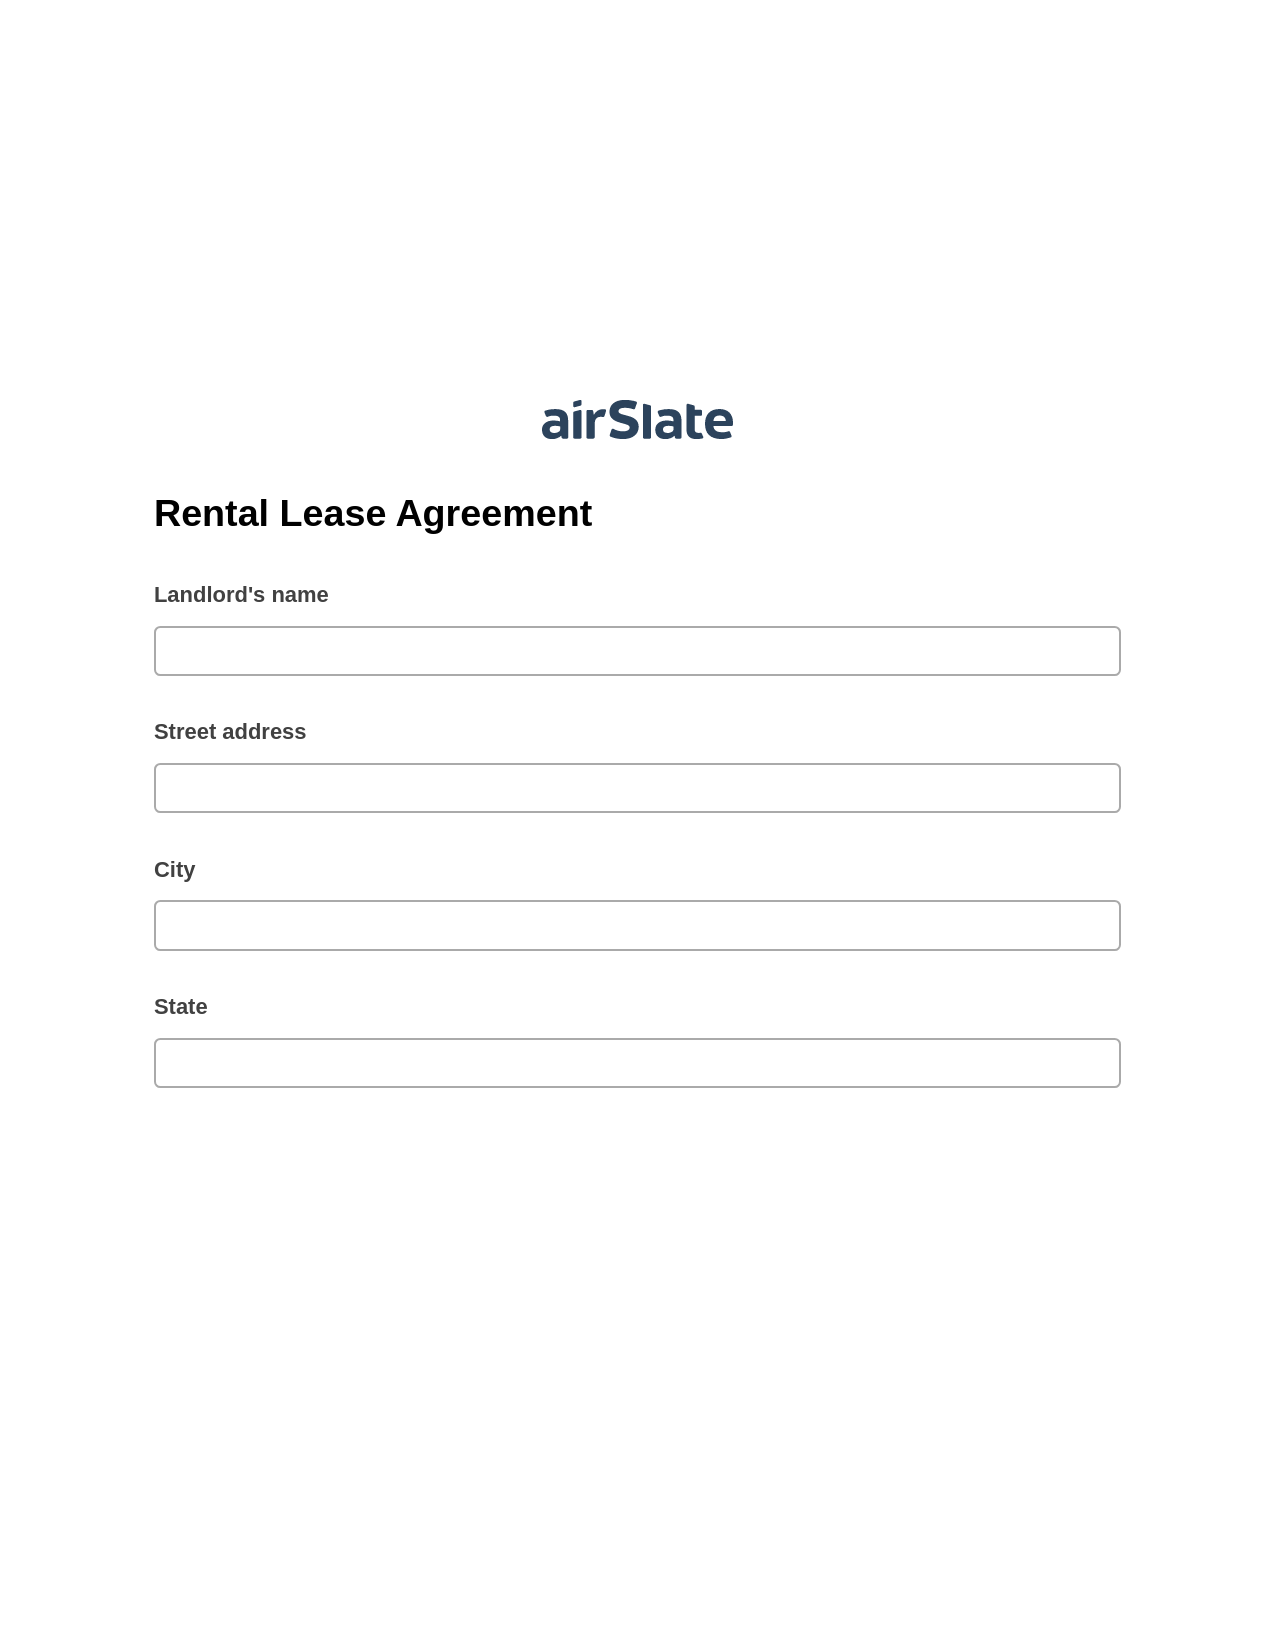 Rental Lease Agreement Pre-fill from MySQL Dropdown Options Bot, Create MS Dynamics 365 Records Bot, Slack Two-Way Binding Bot